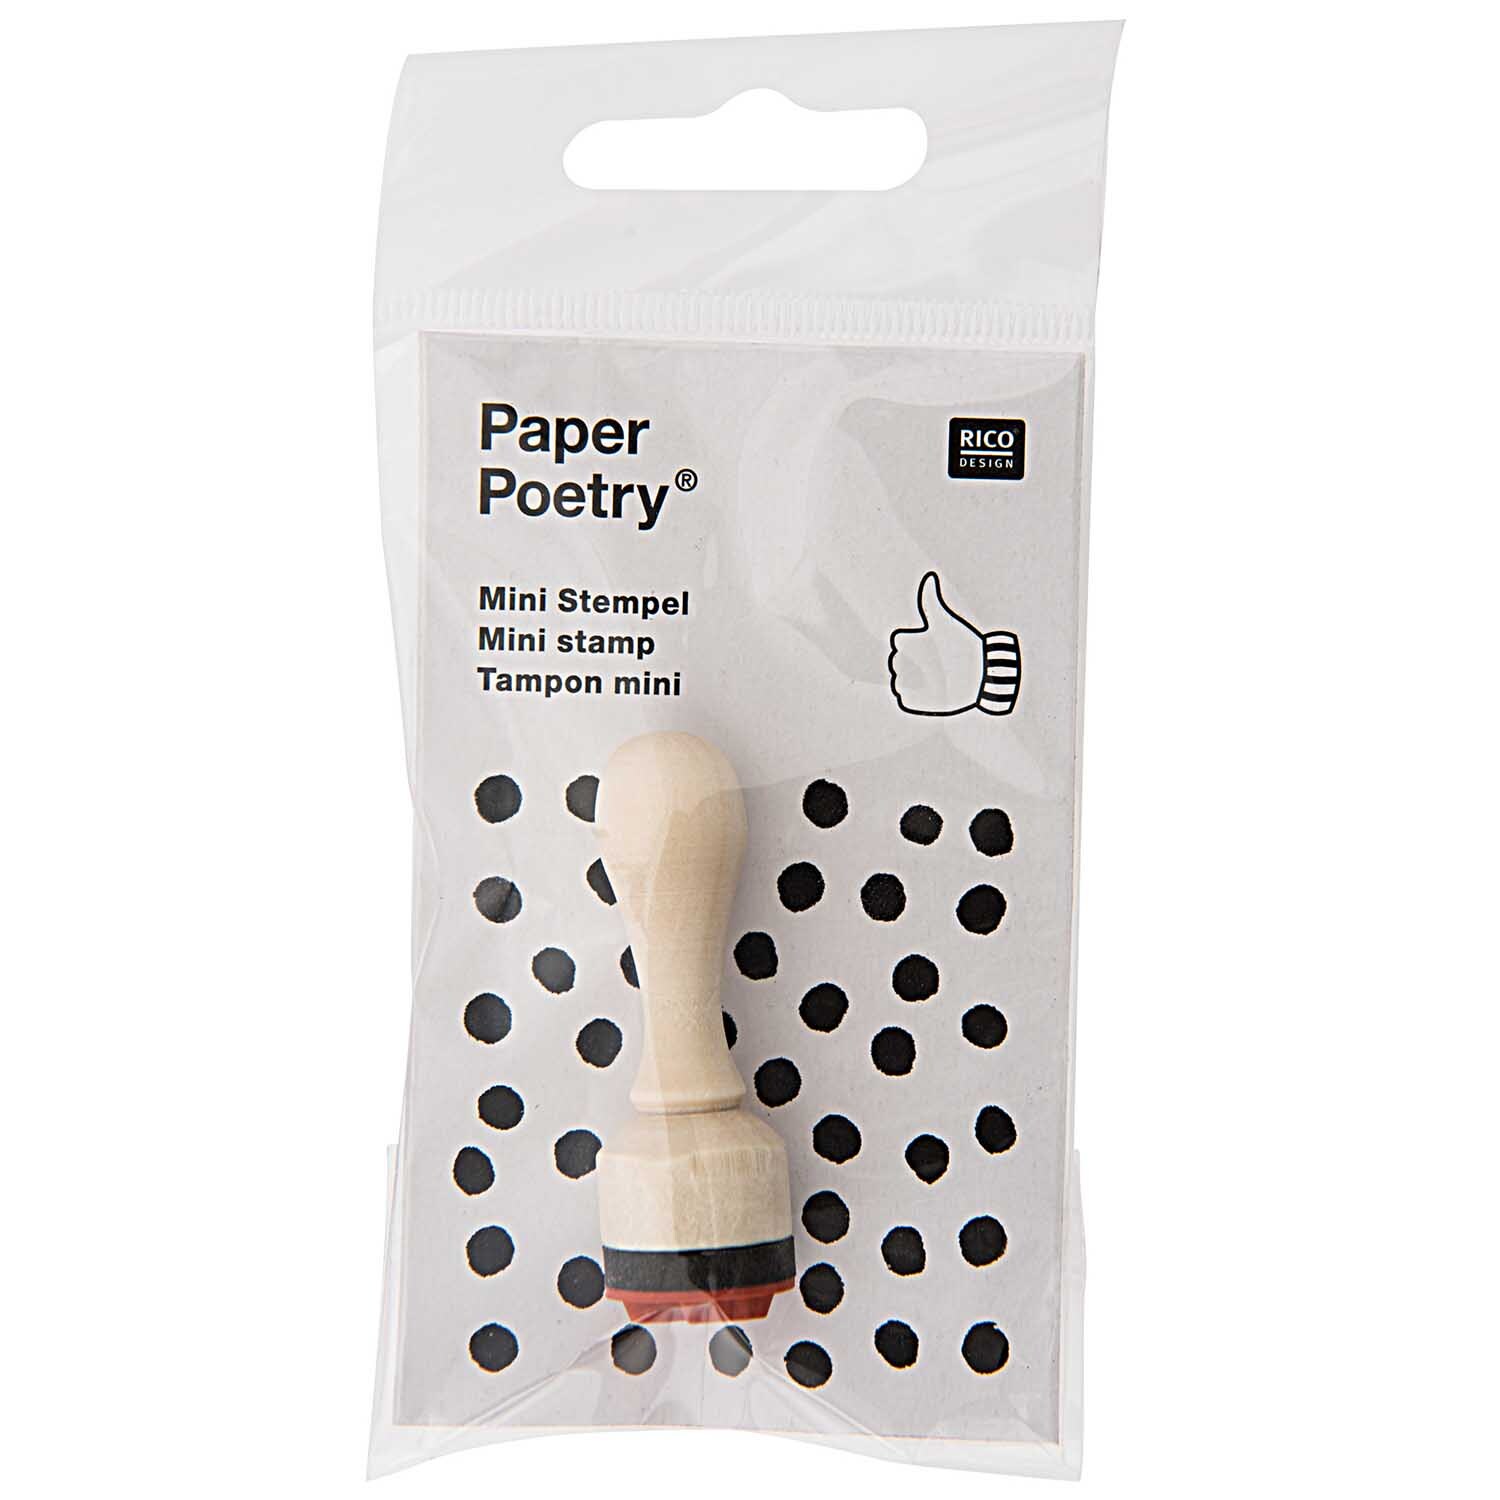 Paper Poetry Mini Stempel Gefällt mir Ø=1,5cm